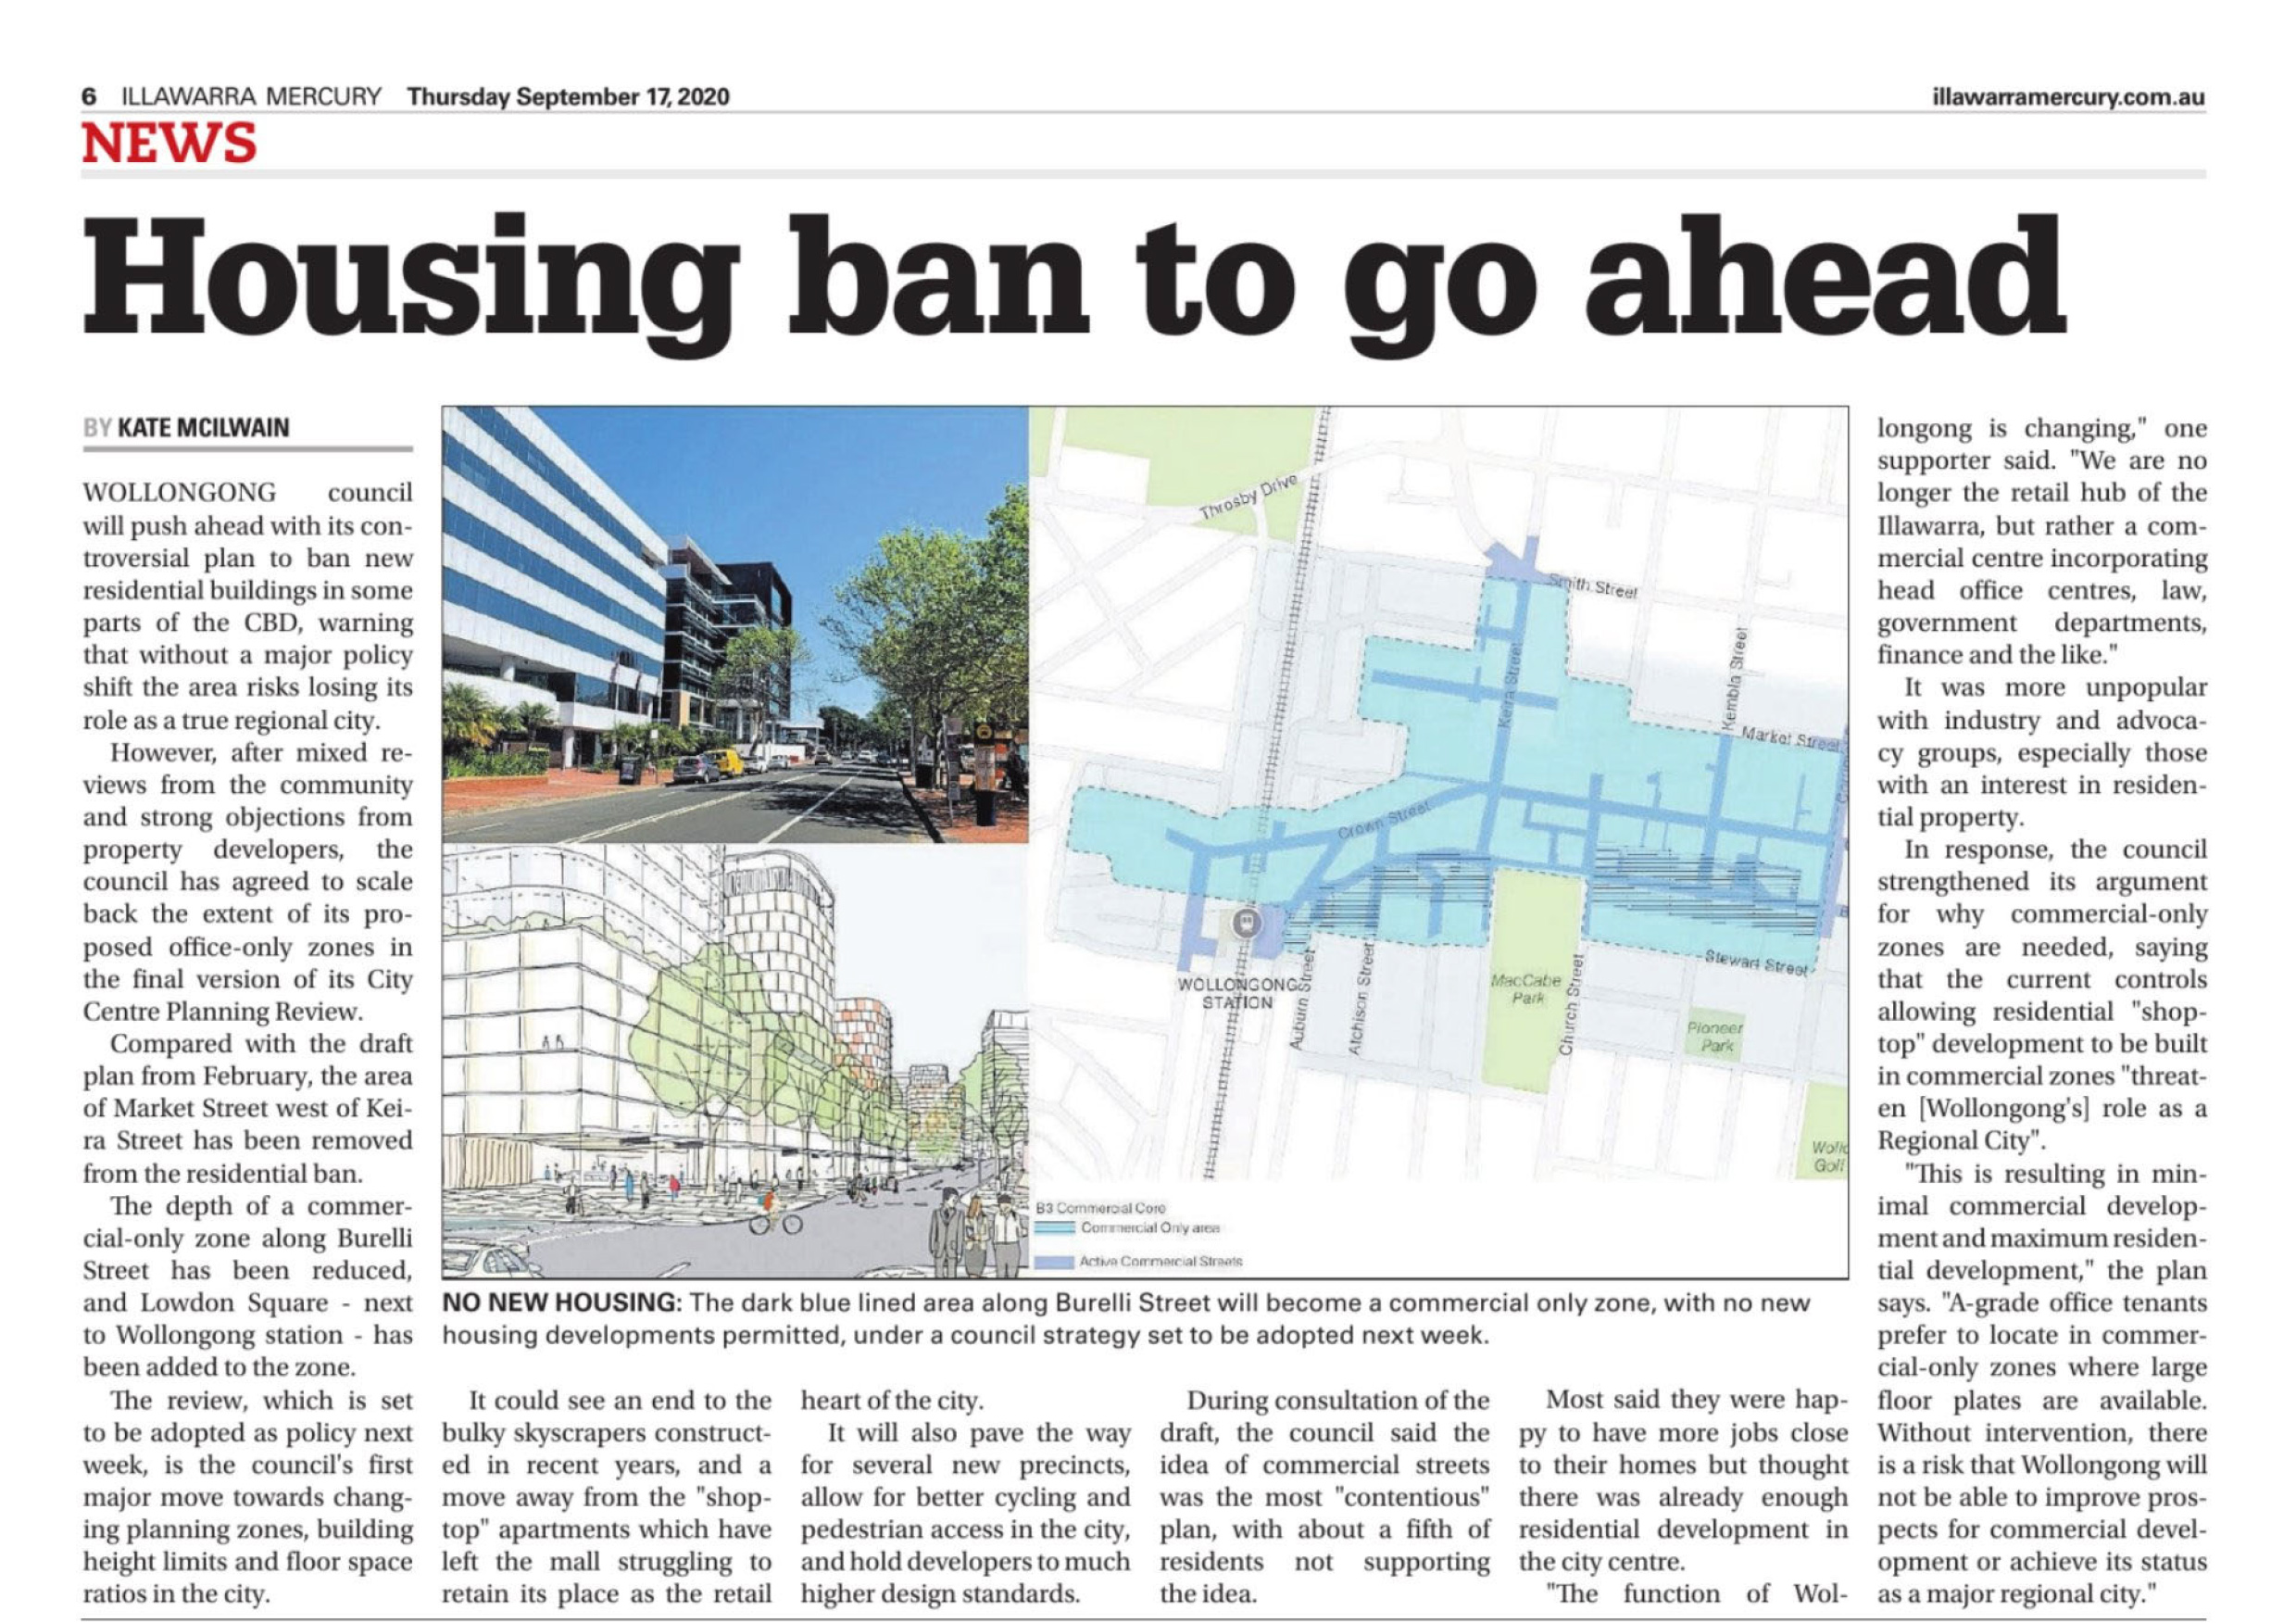 17 SEP 2020 Merc Housing Ban To Go Ahead In Wollongong